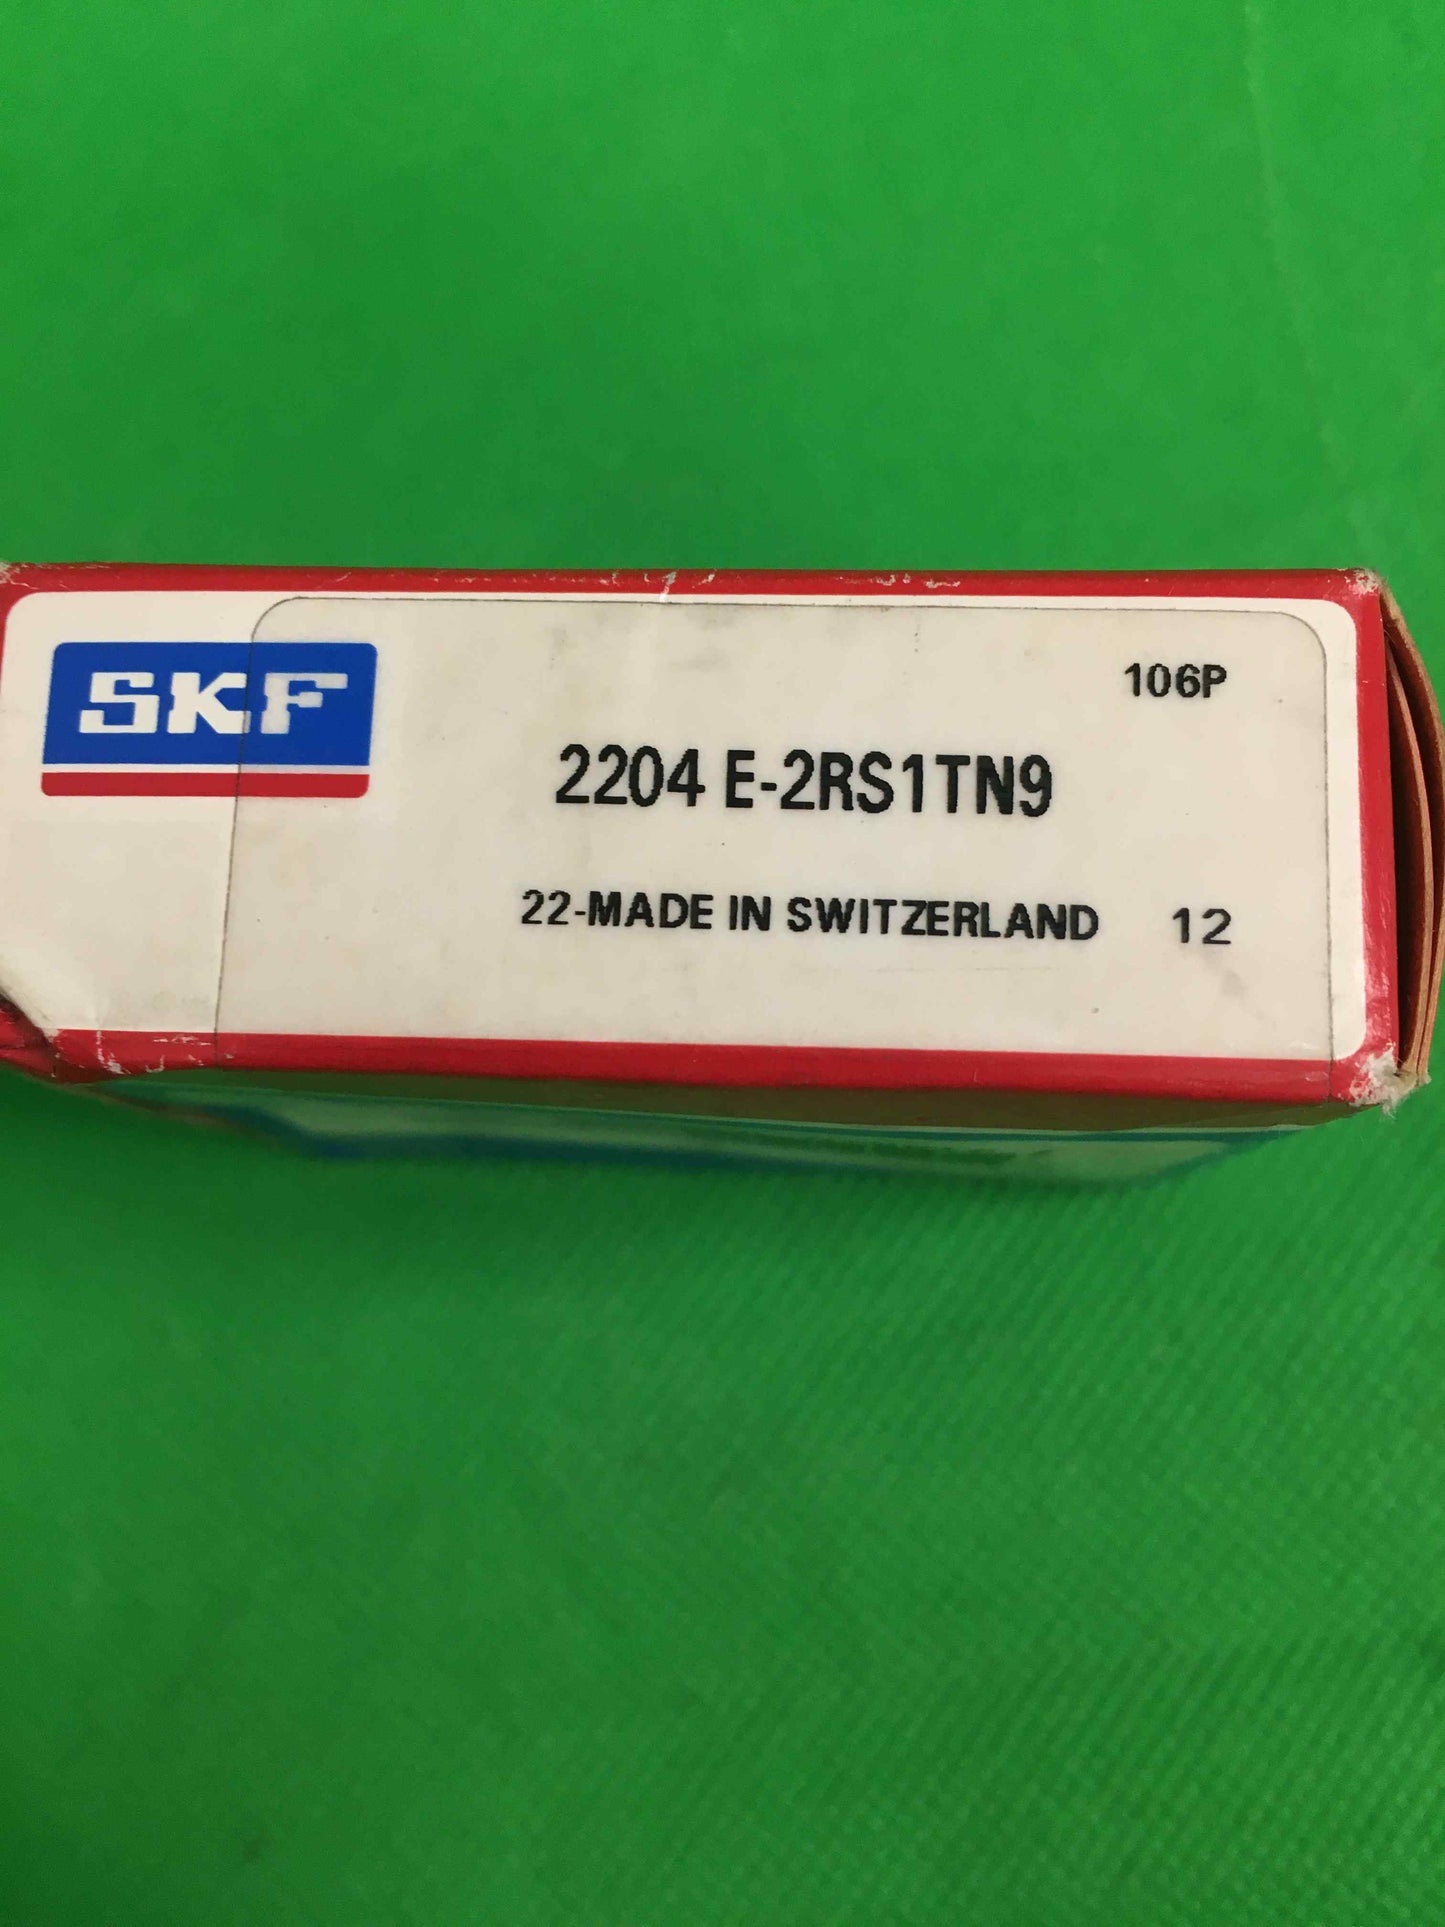 SKF-2204 E-2RS1TN9/2204E2RS1TN9